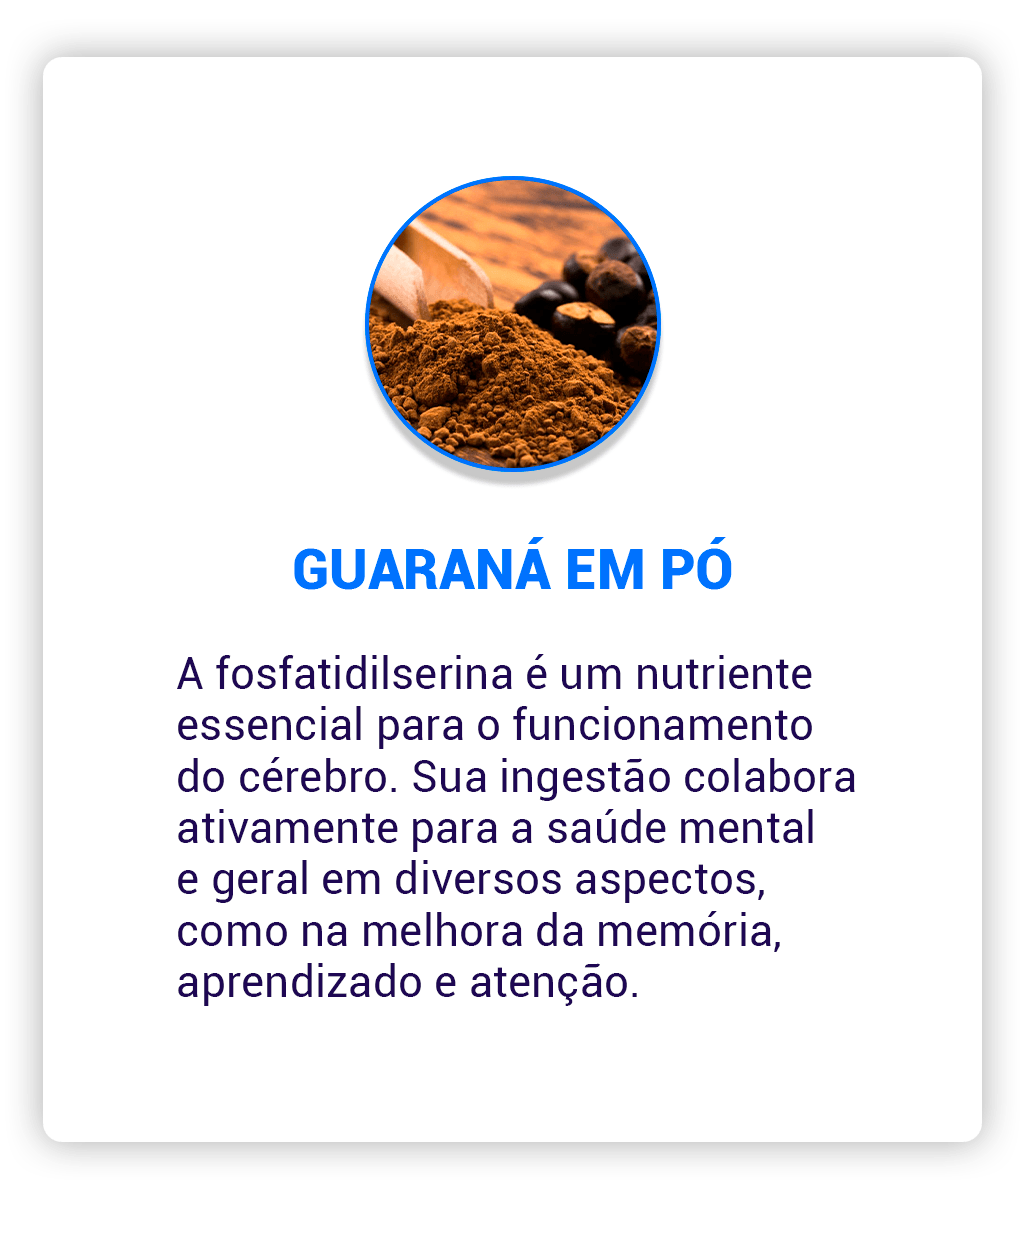 guarana-em-po-min.png